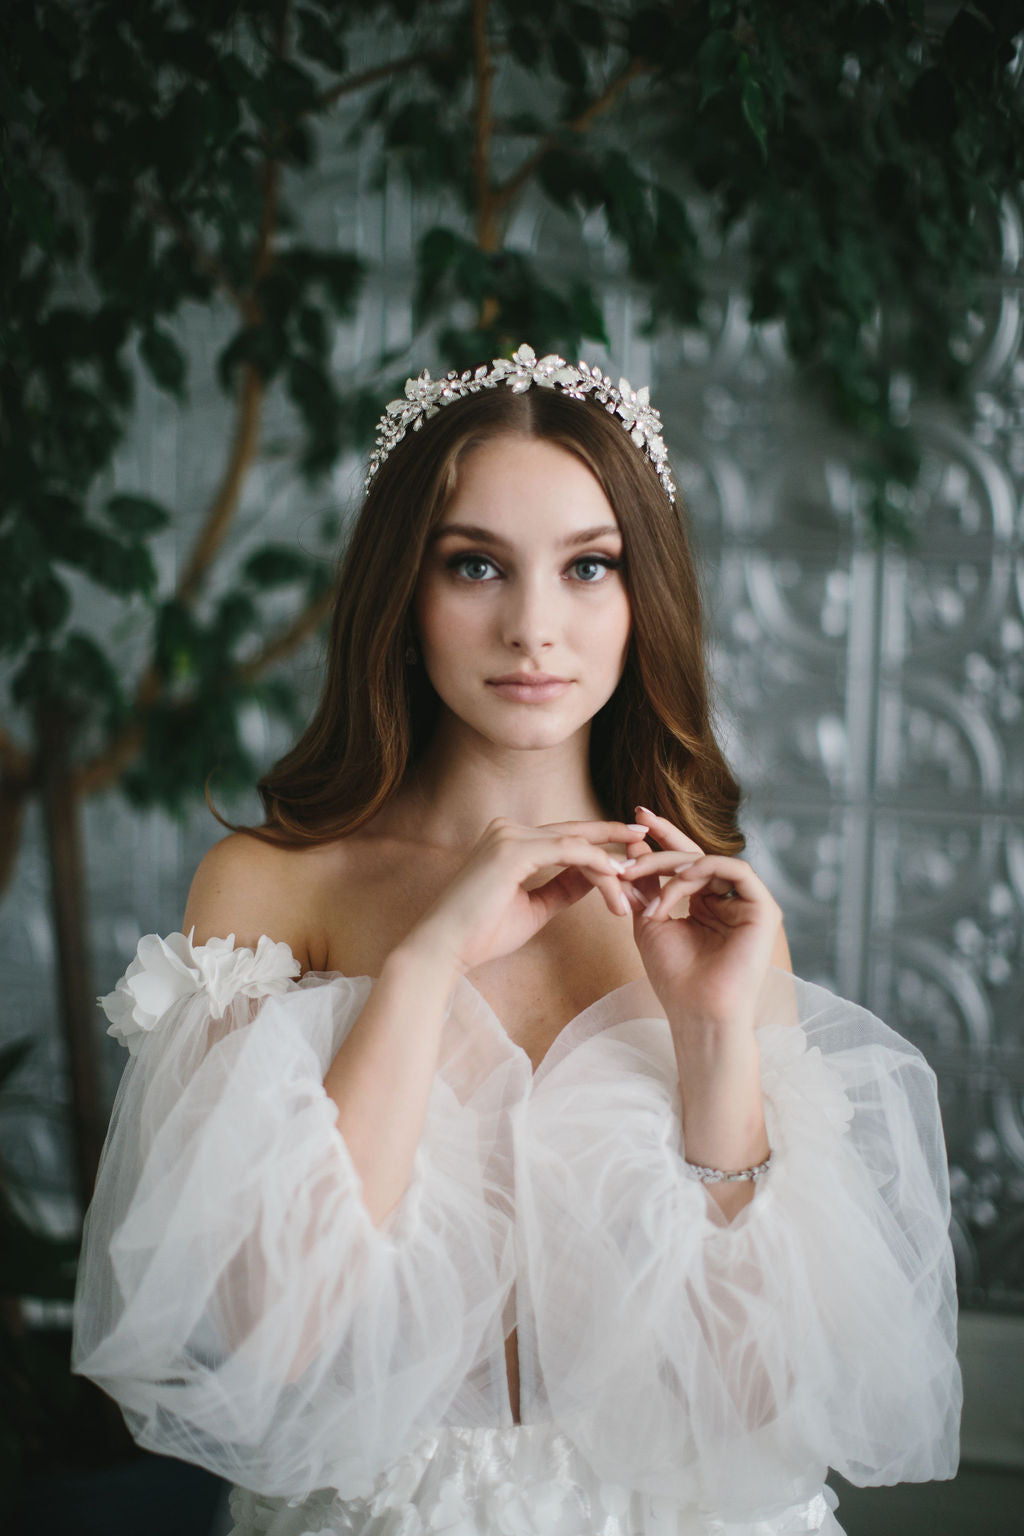 Floral & Crystal Wedding Crown for Bride